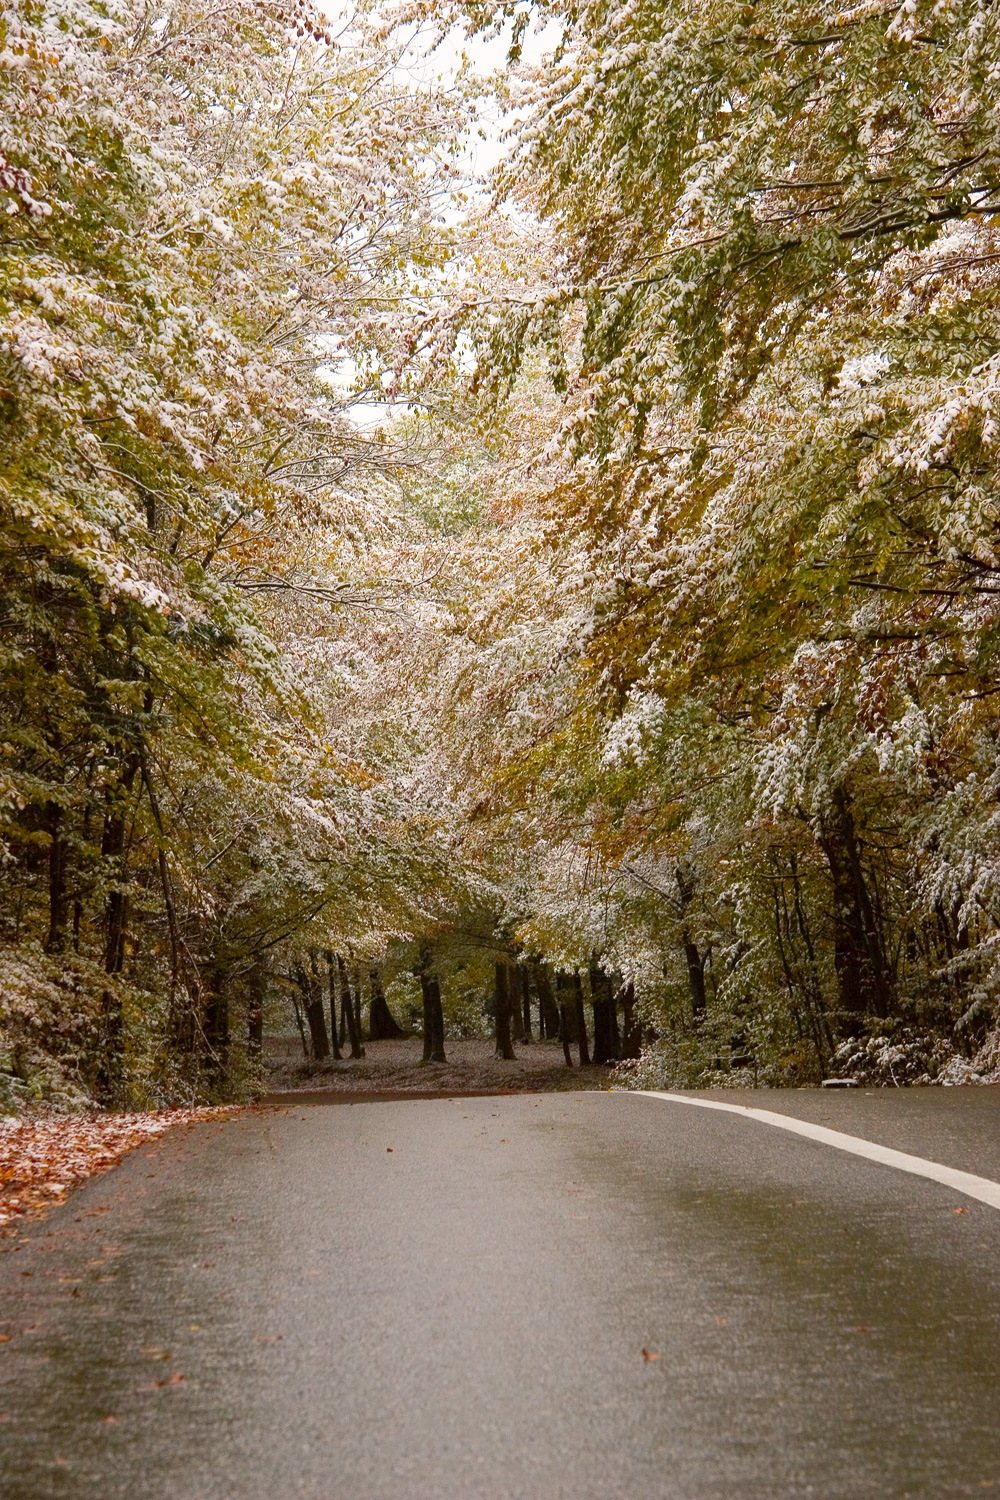 Wet road in forest between seasons